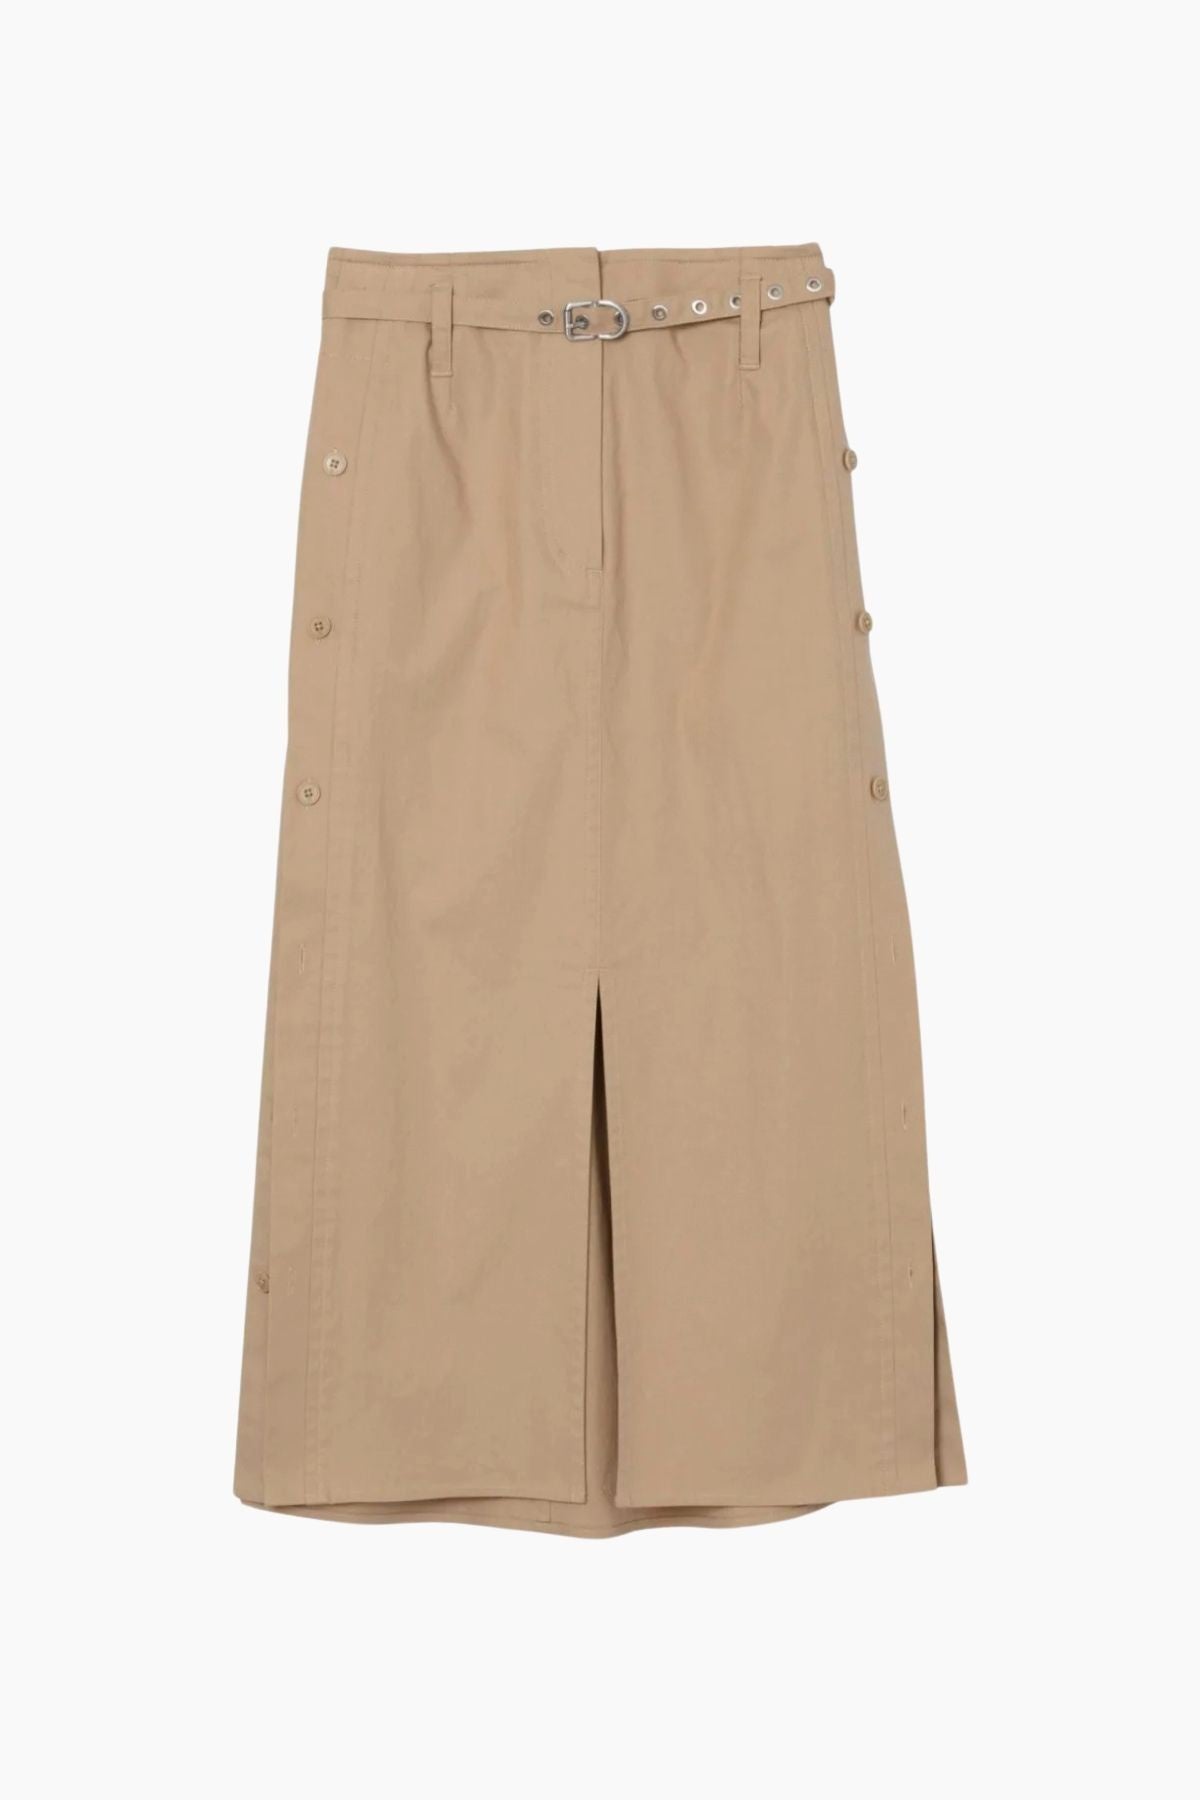 3.1 Phillip Lim Button Side Utility Skirt - Khaki